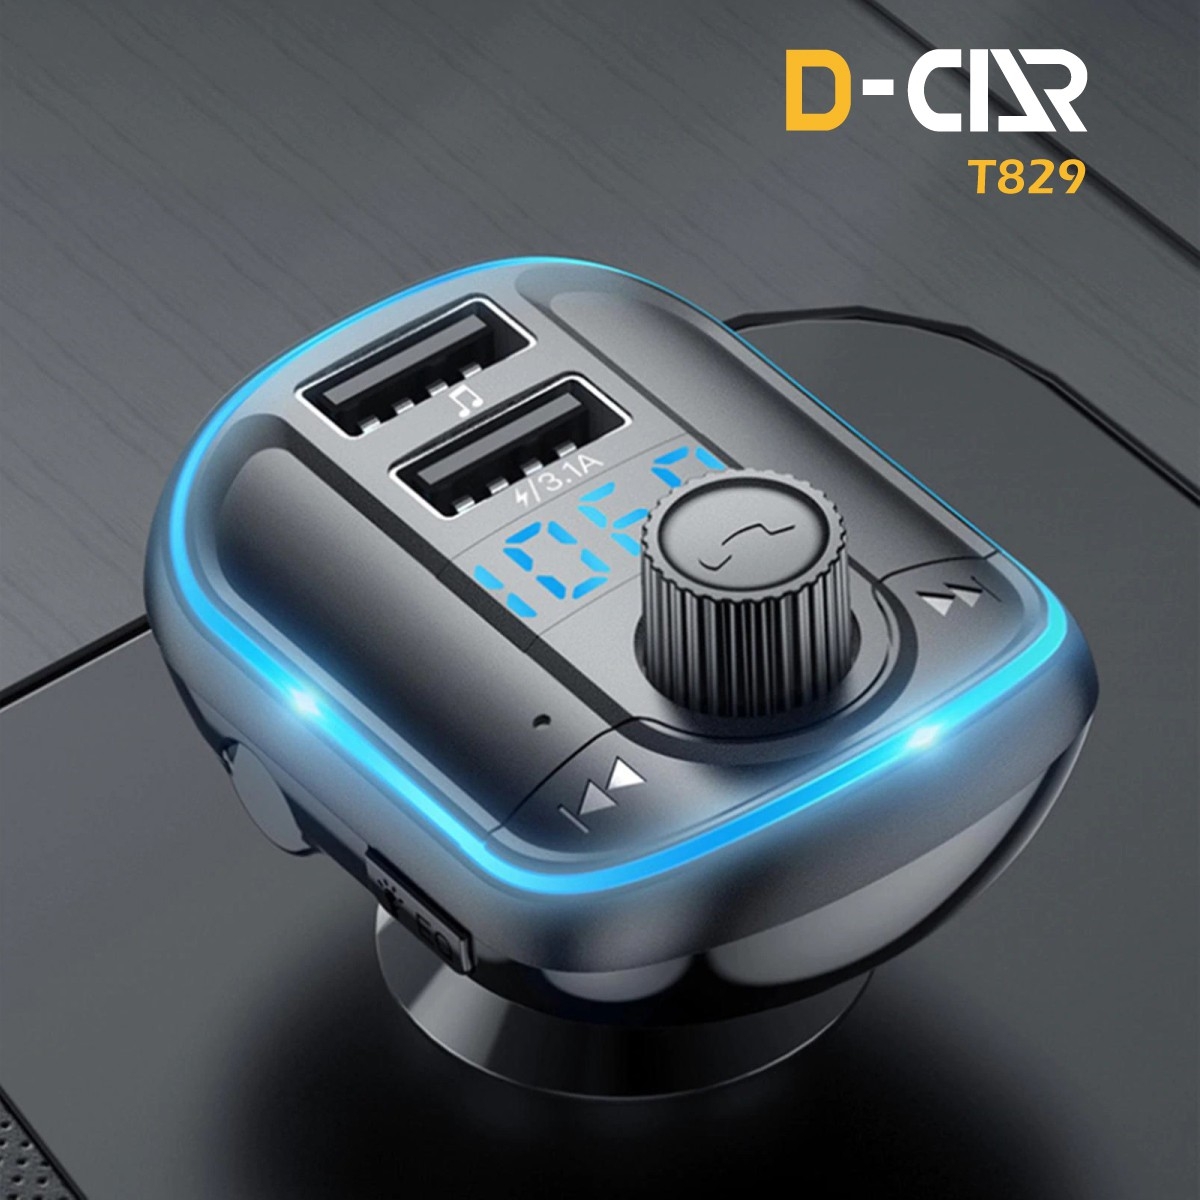 HYUNDAI บลูทูธรถยนต์  ตัวรับสัญญาณบลูทูธ ตัวเปิด FM บลูทูธรถยนต์ บลูทูธ รถยนต์ เครื่องเล่น MP3 ในรถยนต์ บลูทูธในรถ / D-PHONE